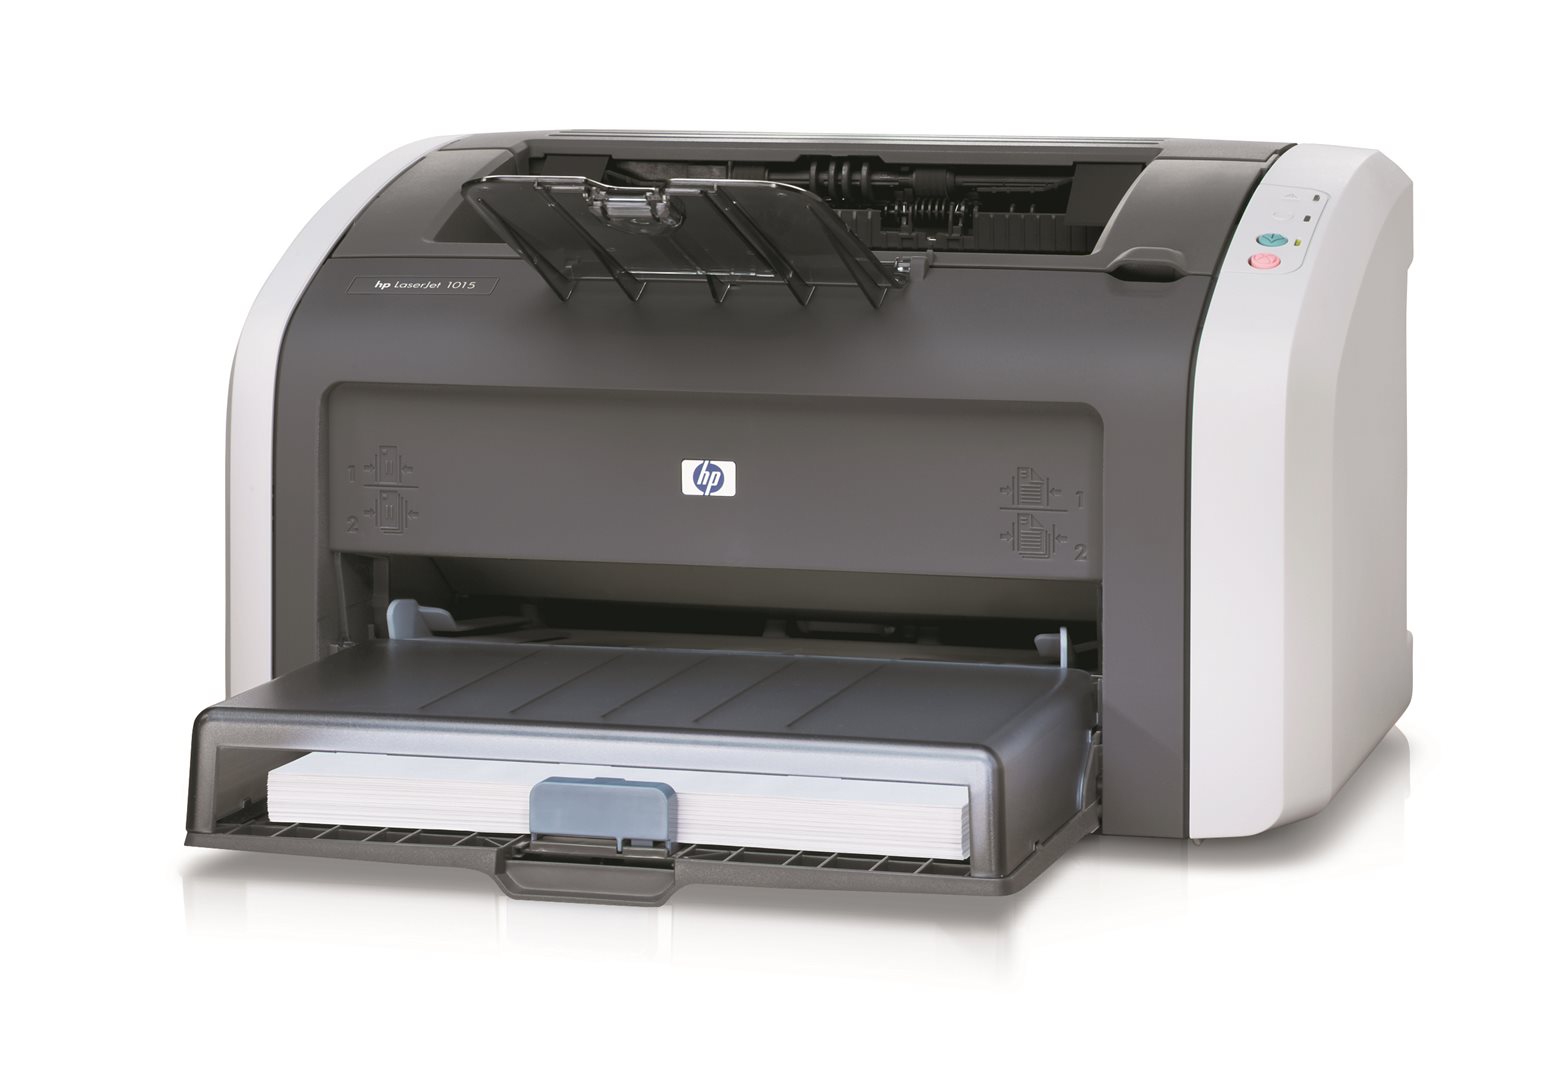 Tiskárna HP LaserJet 1015